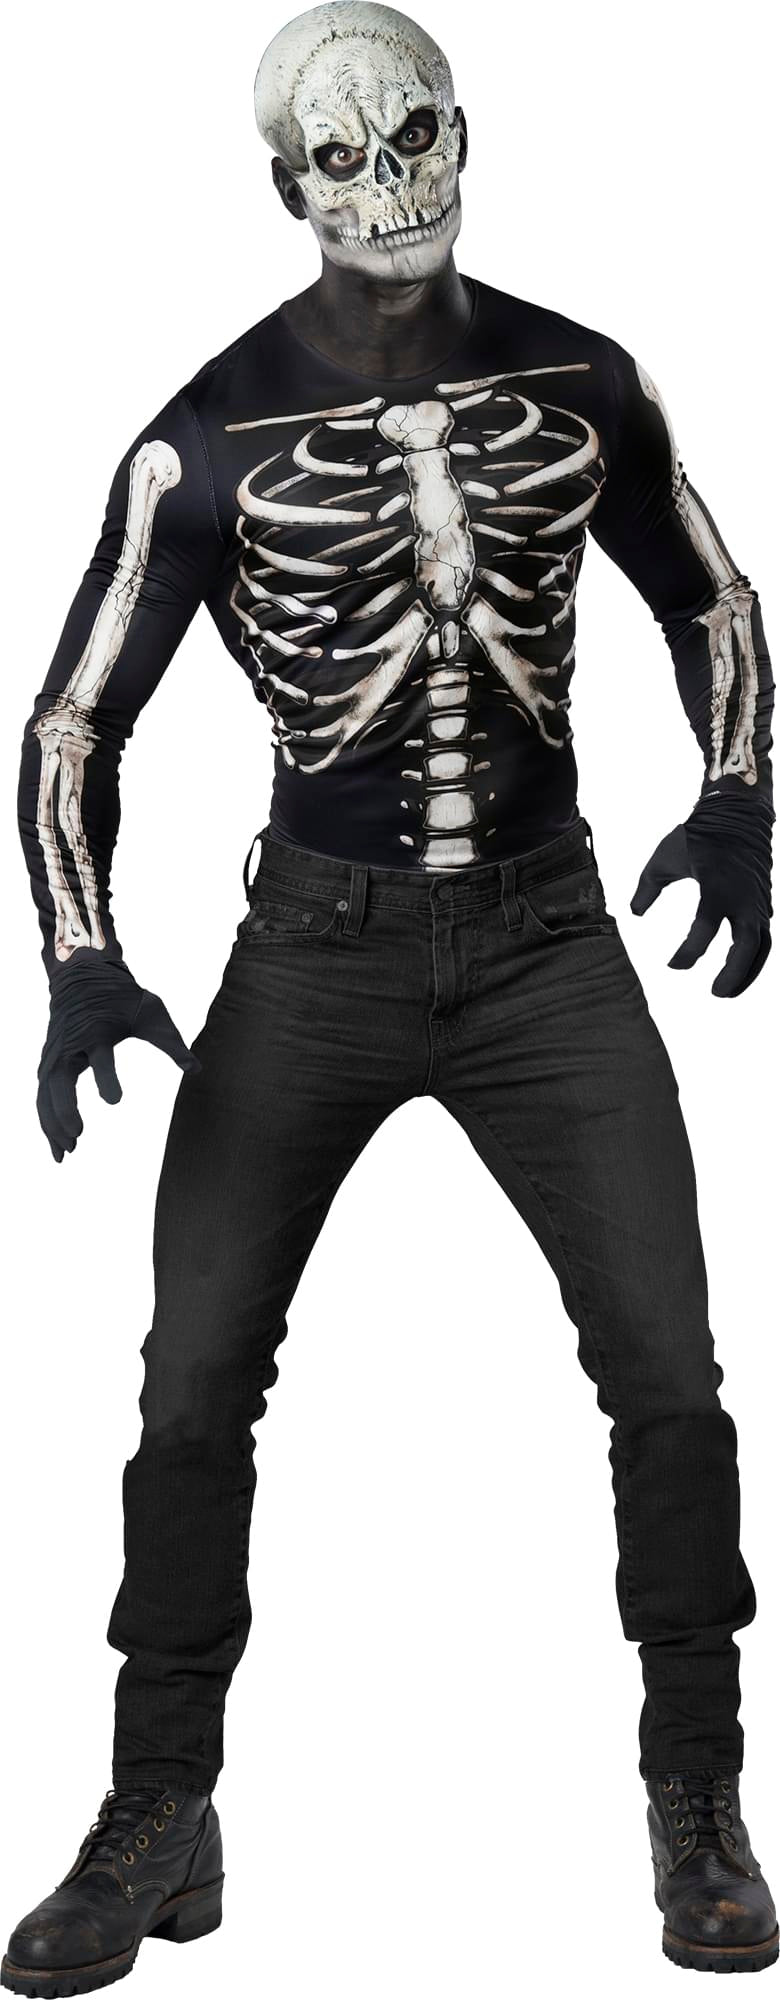 Skeleton Shirt & Mask Adult Costume Kit